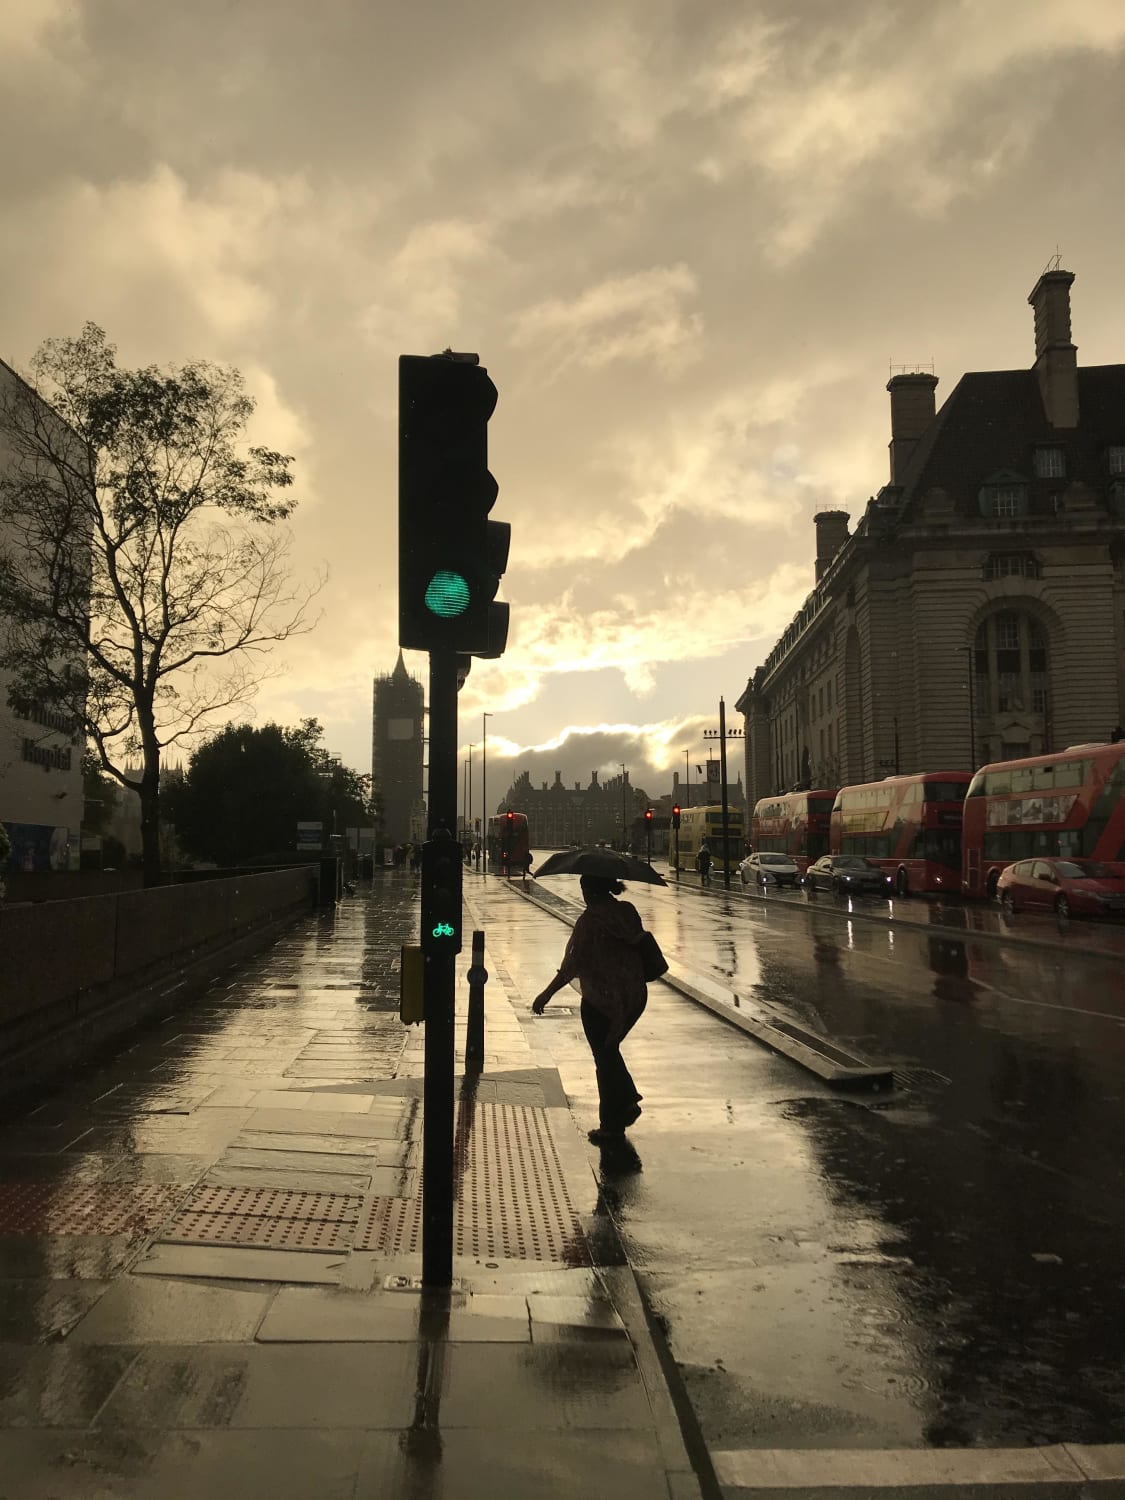 ITAP of London in the rain